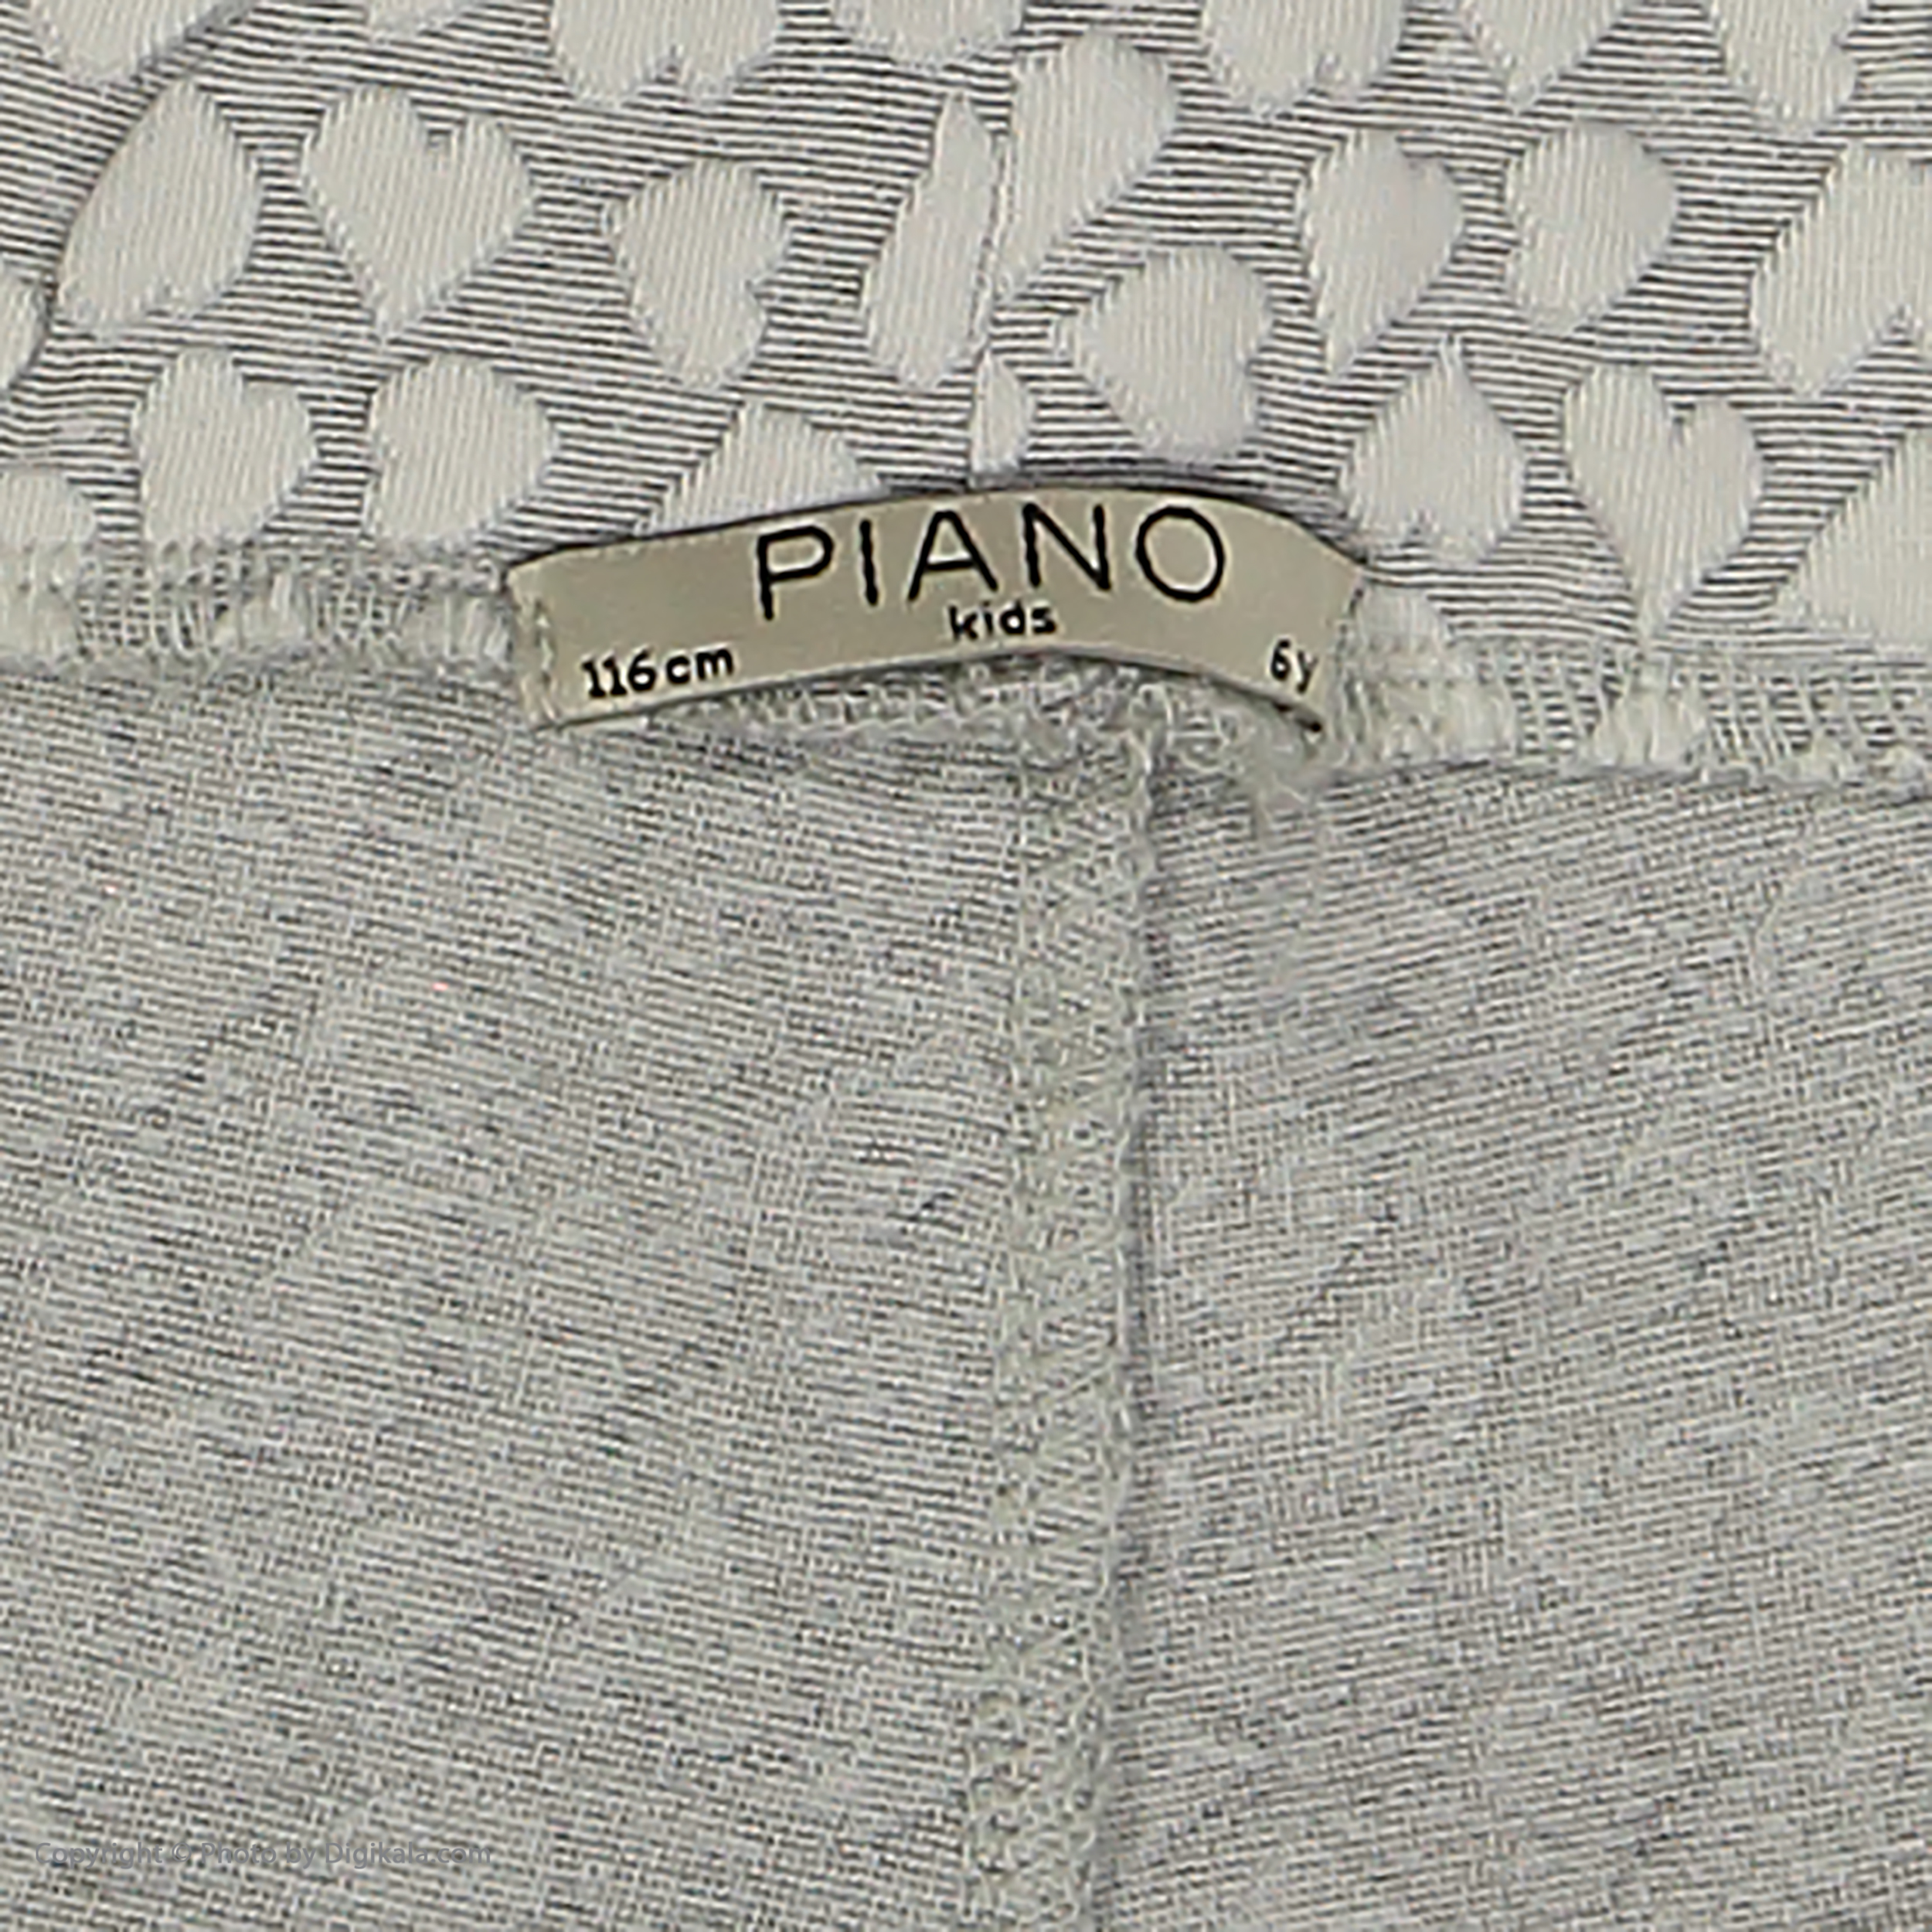 شلوار دخترانه پیانو مدل 1009009901687-5 -  - 5